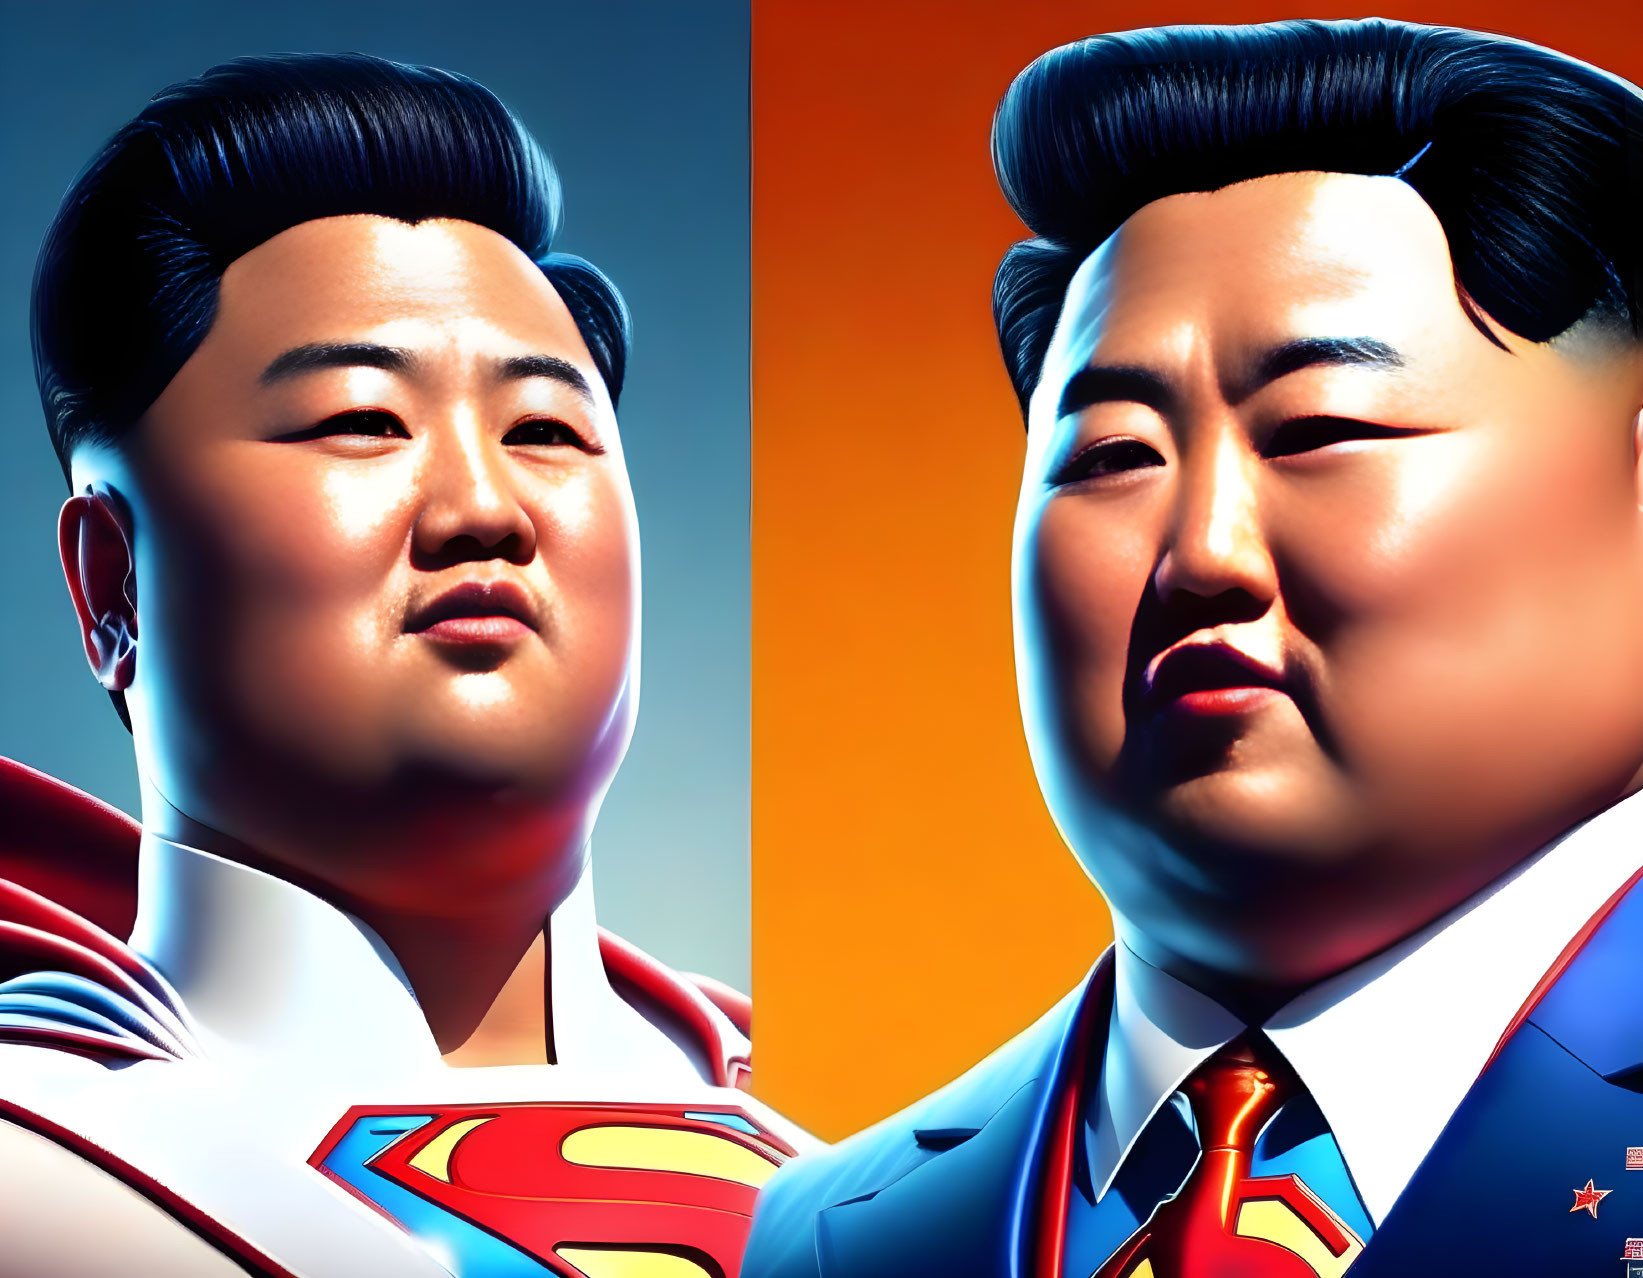 Kim Jong-un like a Superman.